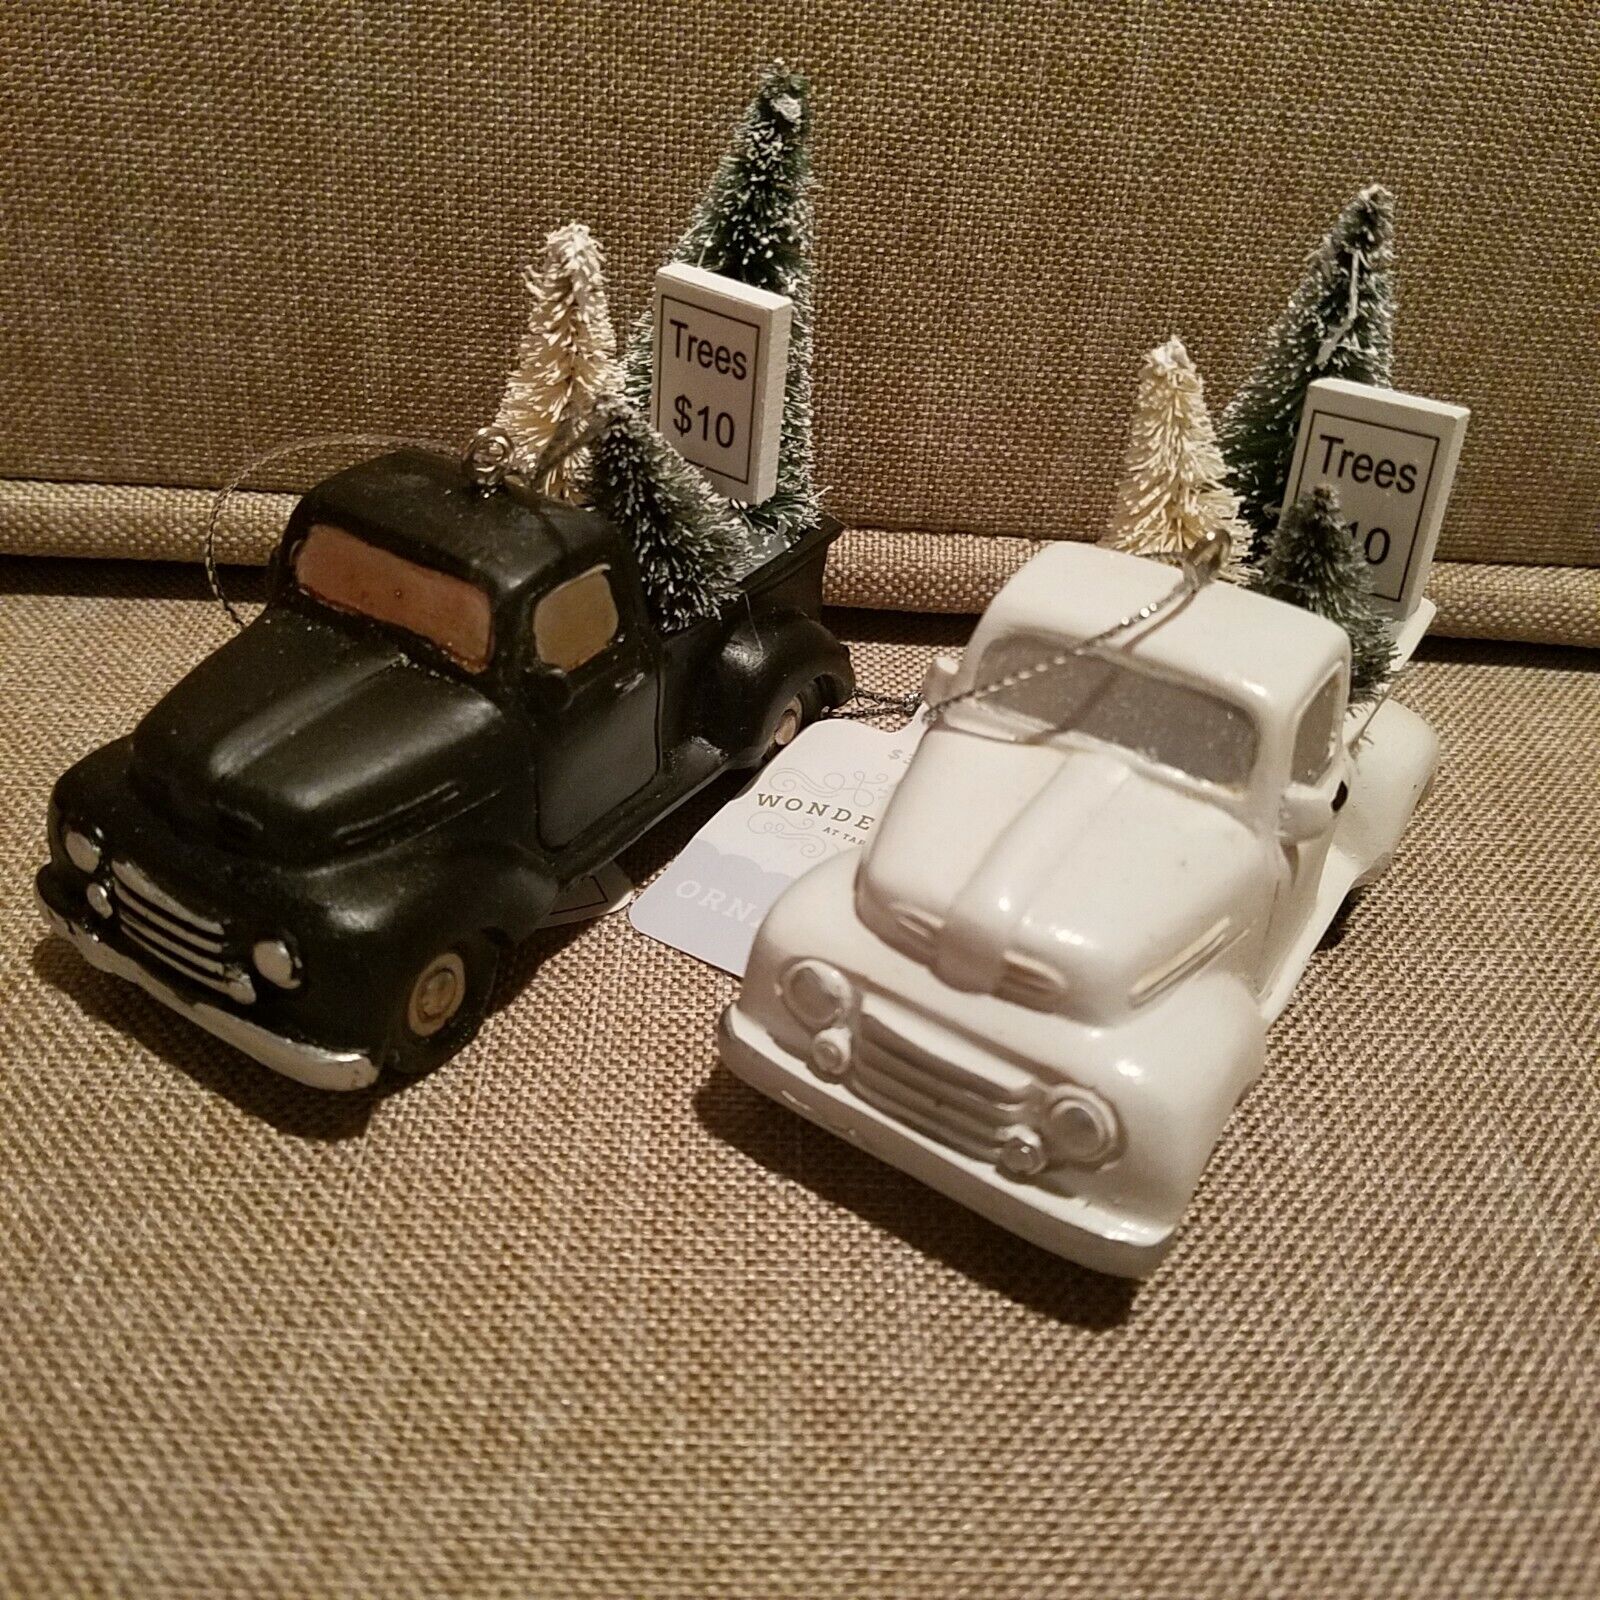 Target Wondershop Truck with Trees Christmas Ornaments Farmhouse Decor Set of 2